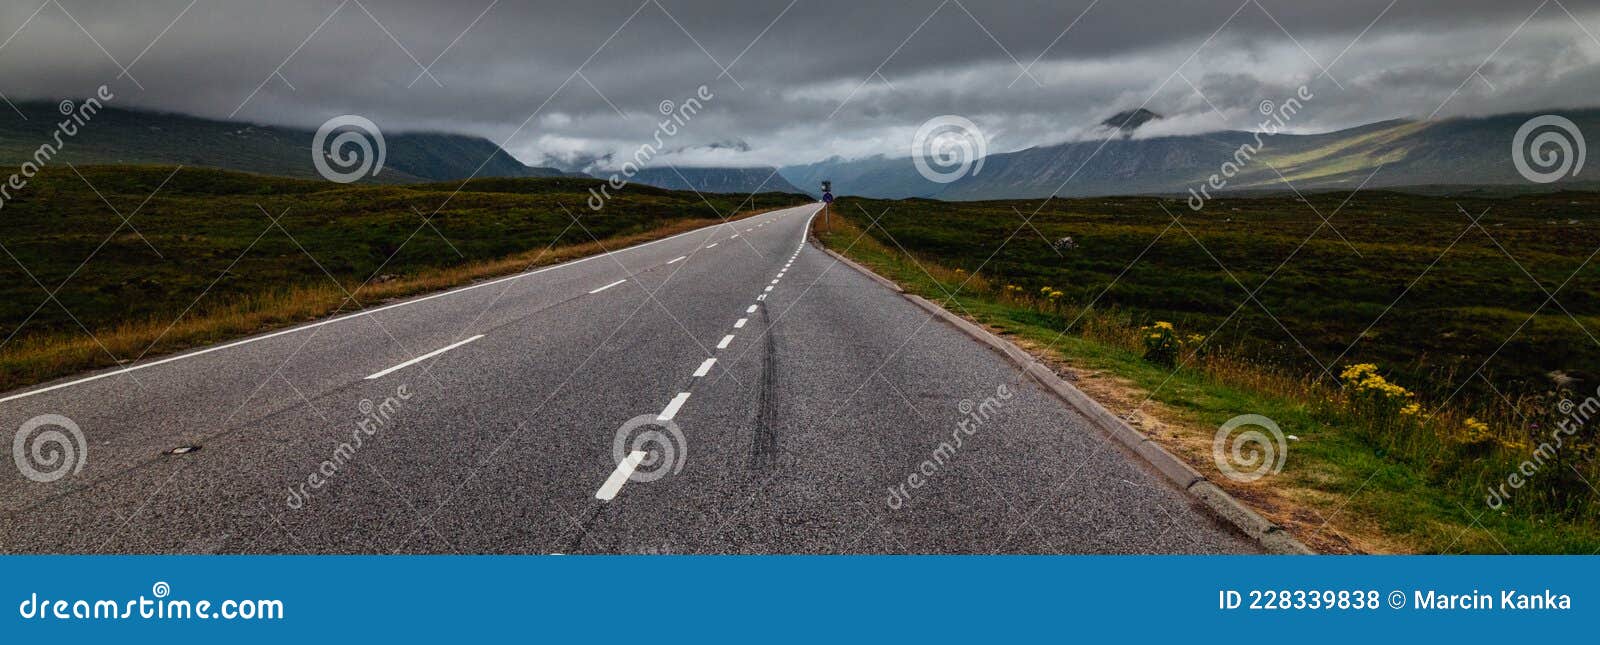 scotland glen etive, james bond skyfall road